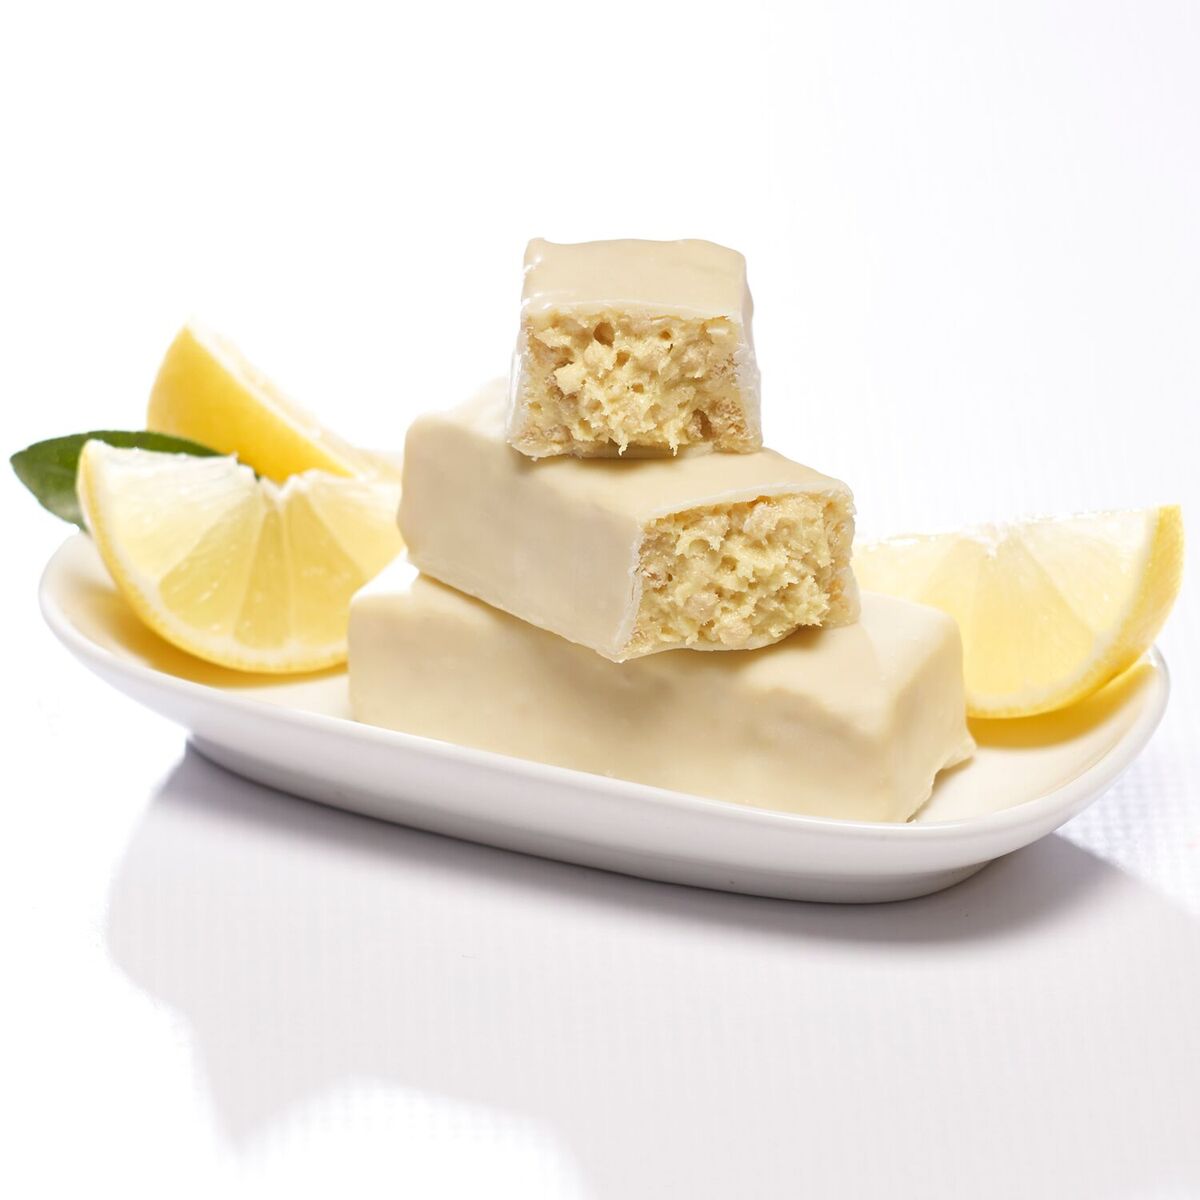 Zesty Lemon protein bars with lemon slices on white dish